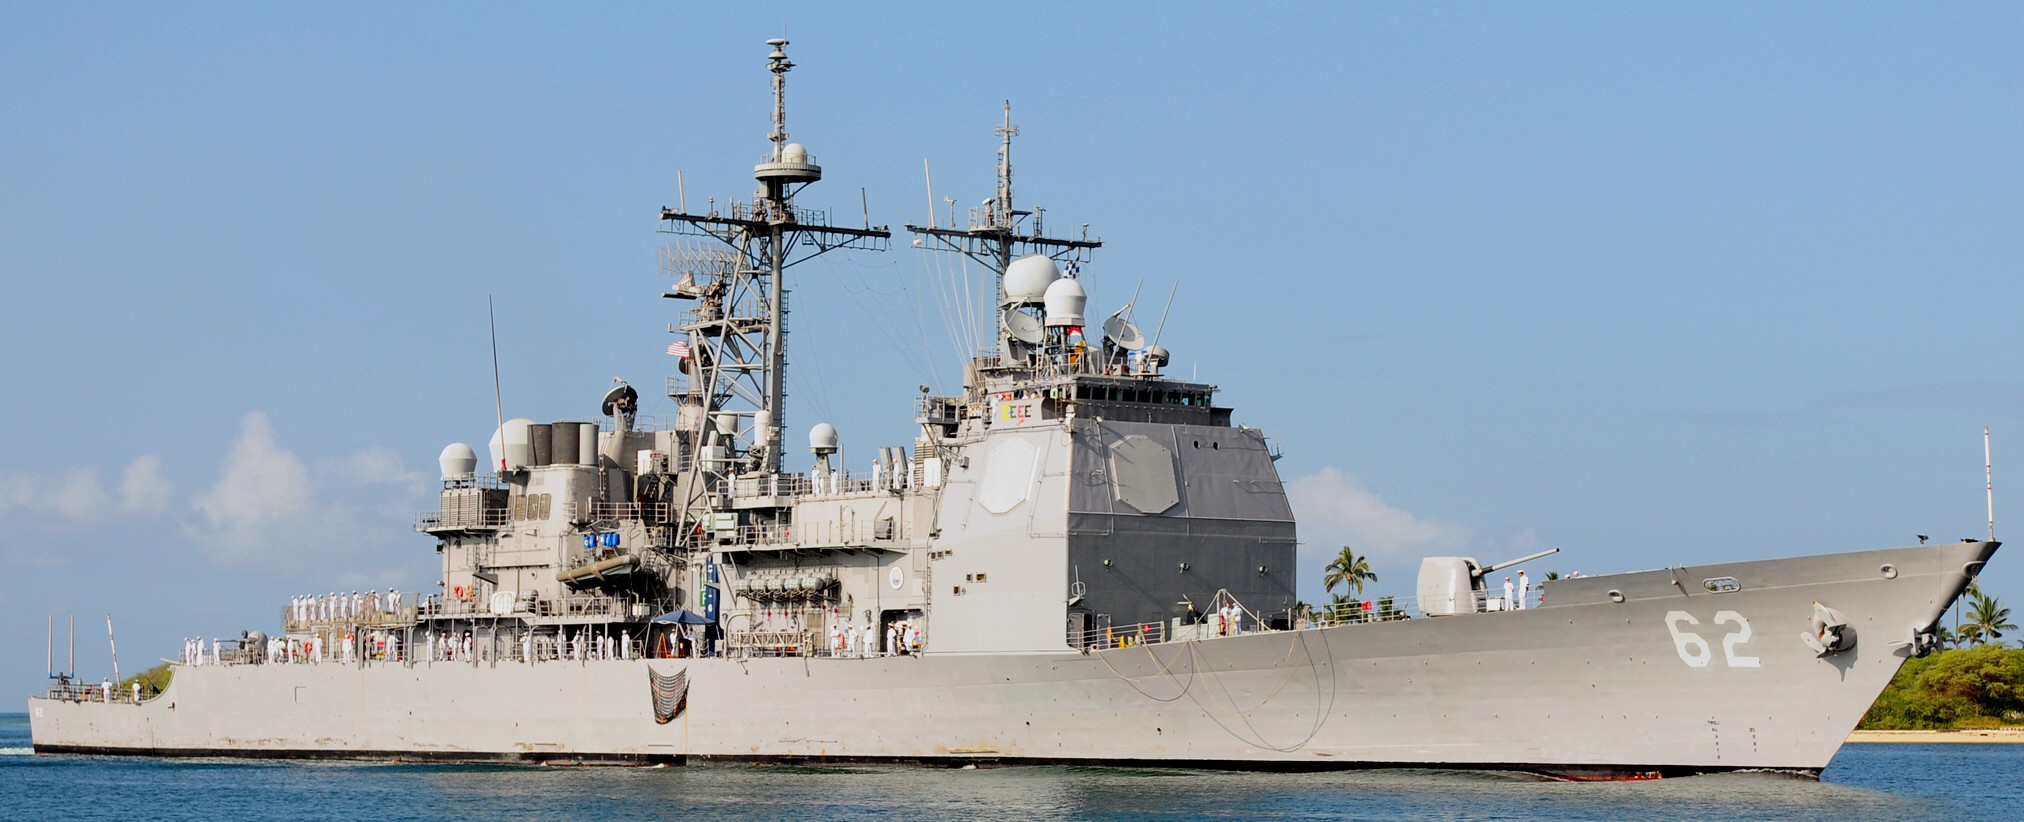 cg-62 uss chancellorsville ticonderoga class guided missile cruiser aegis us navy pearl harbor hawaii 23